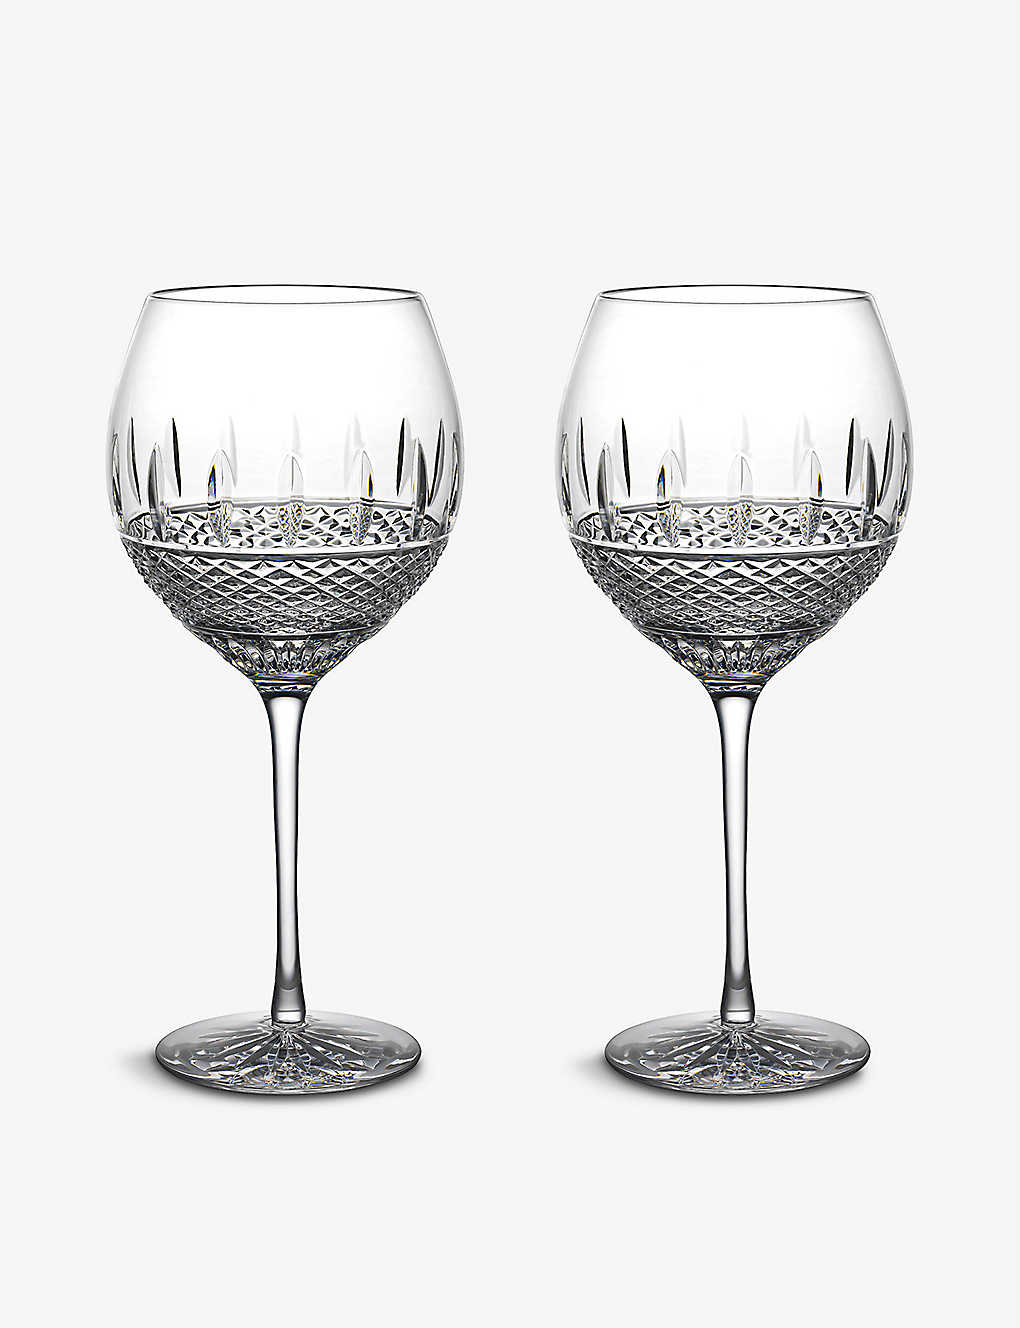 WATERFORD アイリッシュ レース クリスタル ホワイト ワイン グラス 2個セット Irish Lace crystal white wine glasses set of two